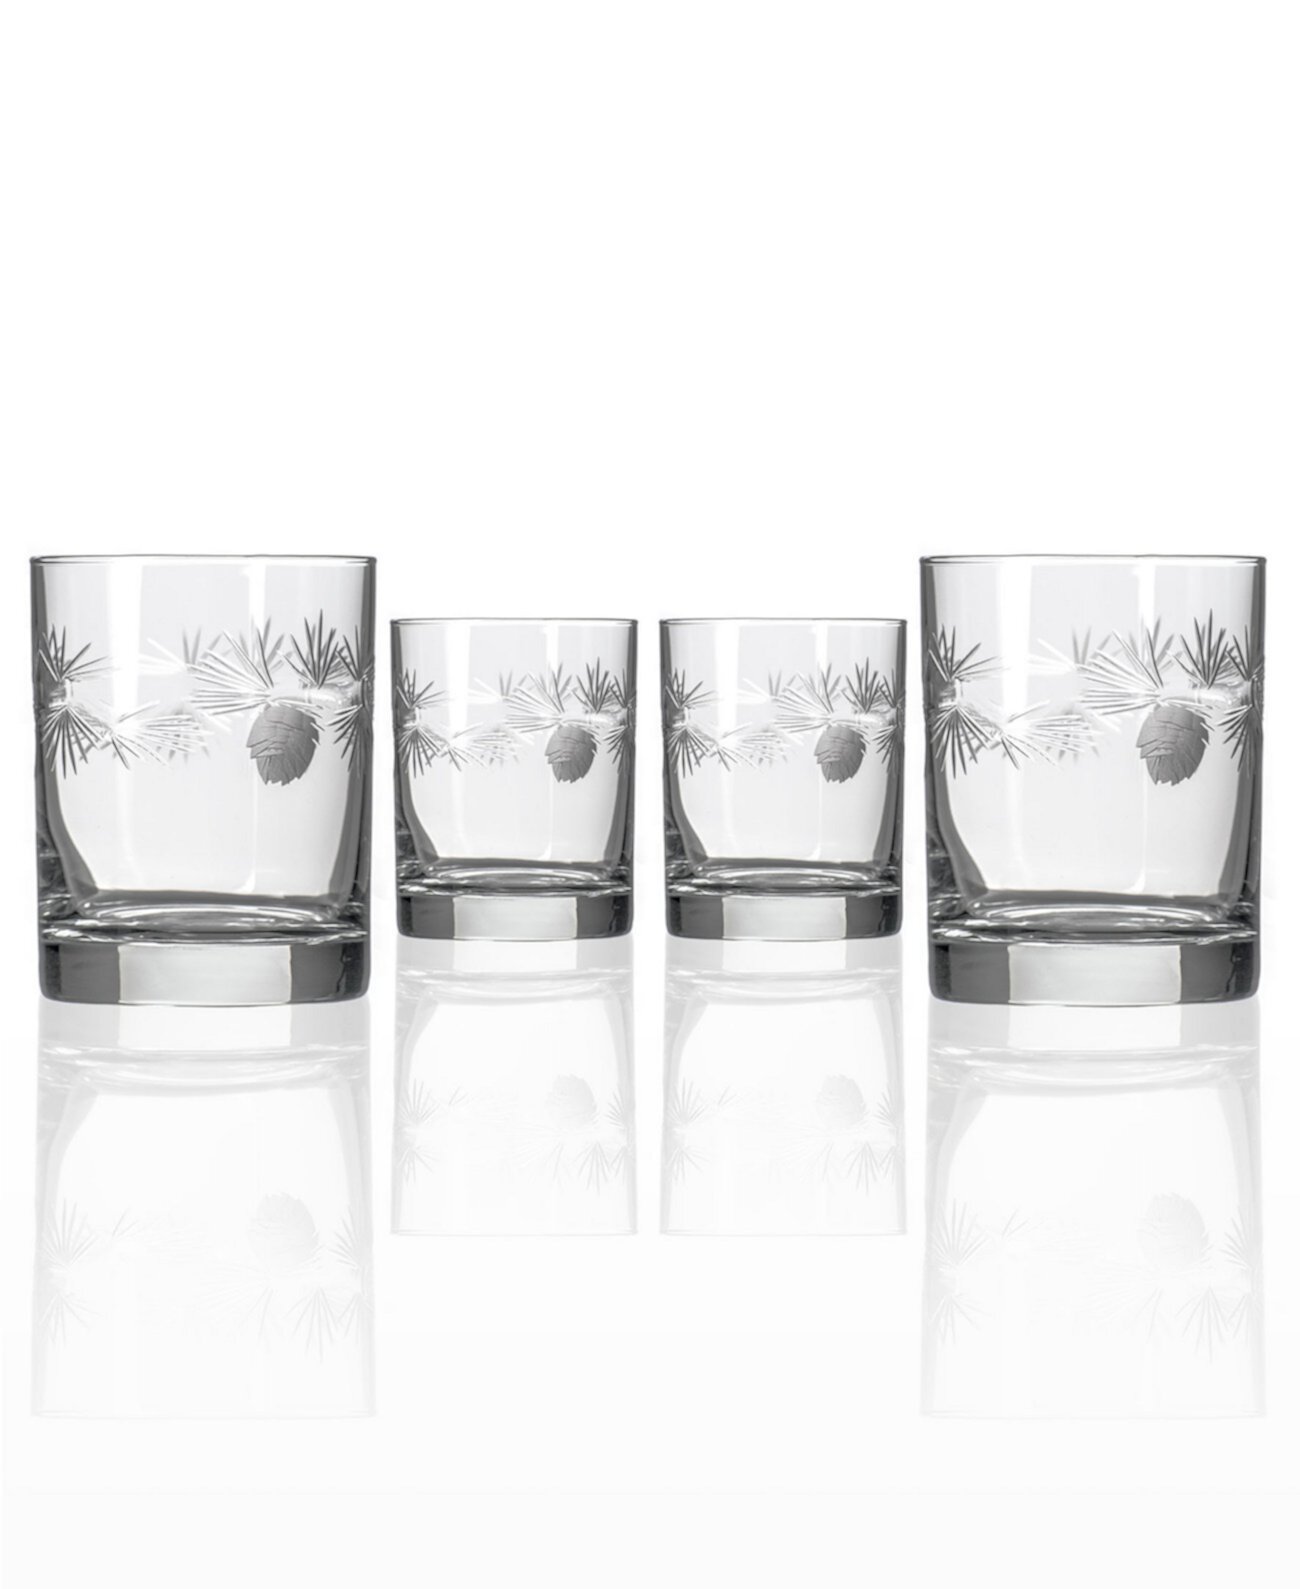 Ледяная сосна Double Old Fashioned 14 унций - набор из 4 стаканов Rolf Glass